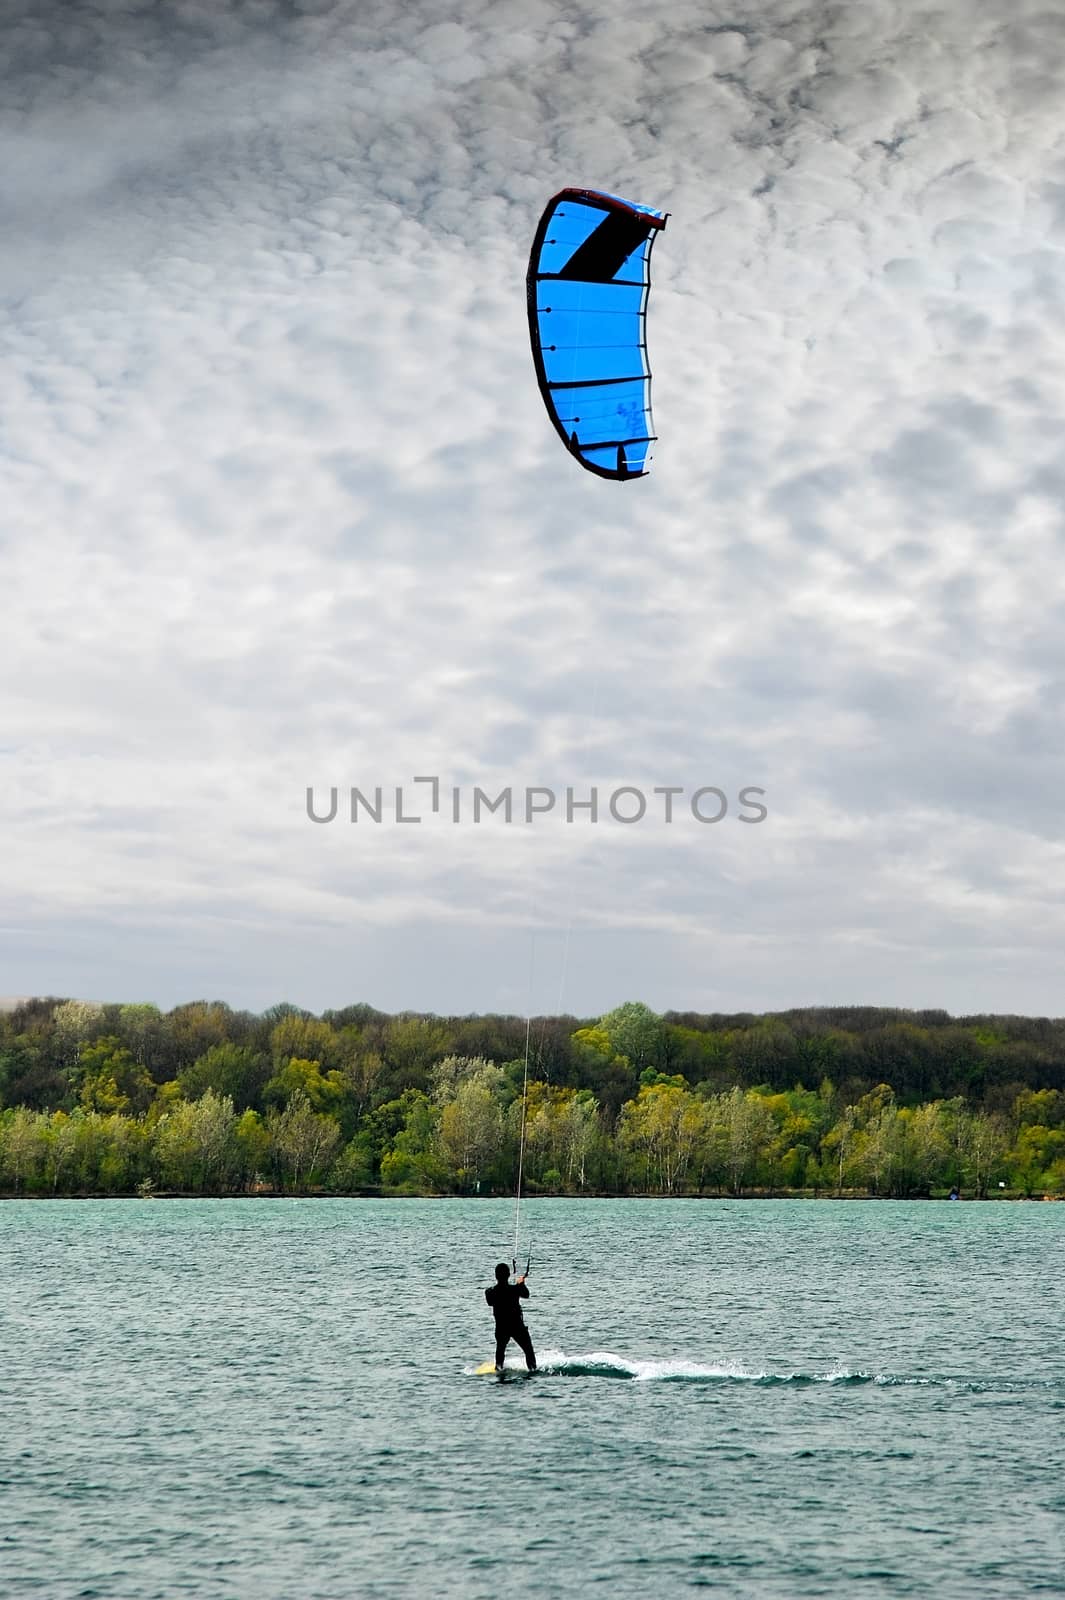 kite adrenaline ride on the lake, speeding